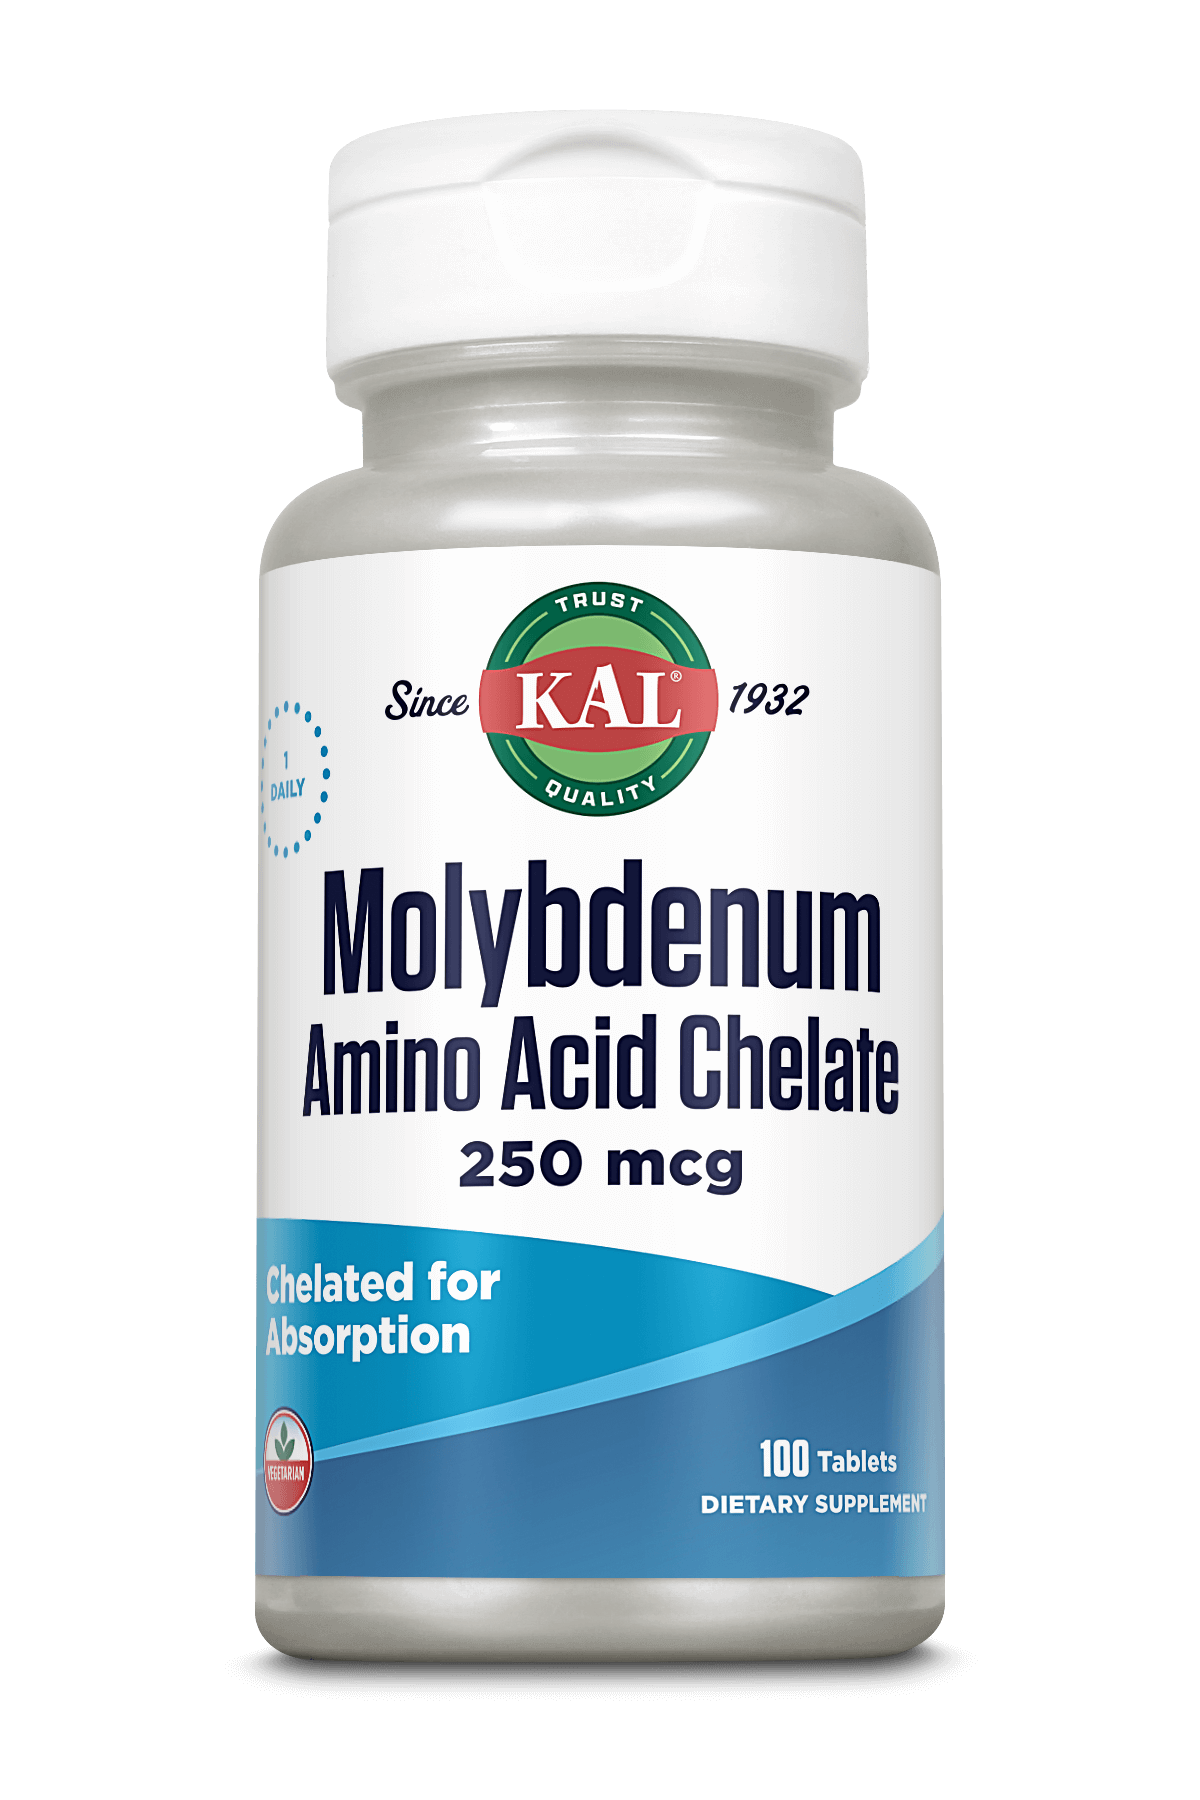 Molybdenum Amino Acid Chelate Tablets